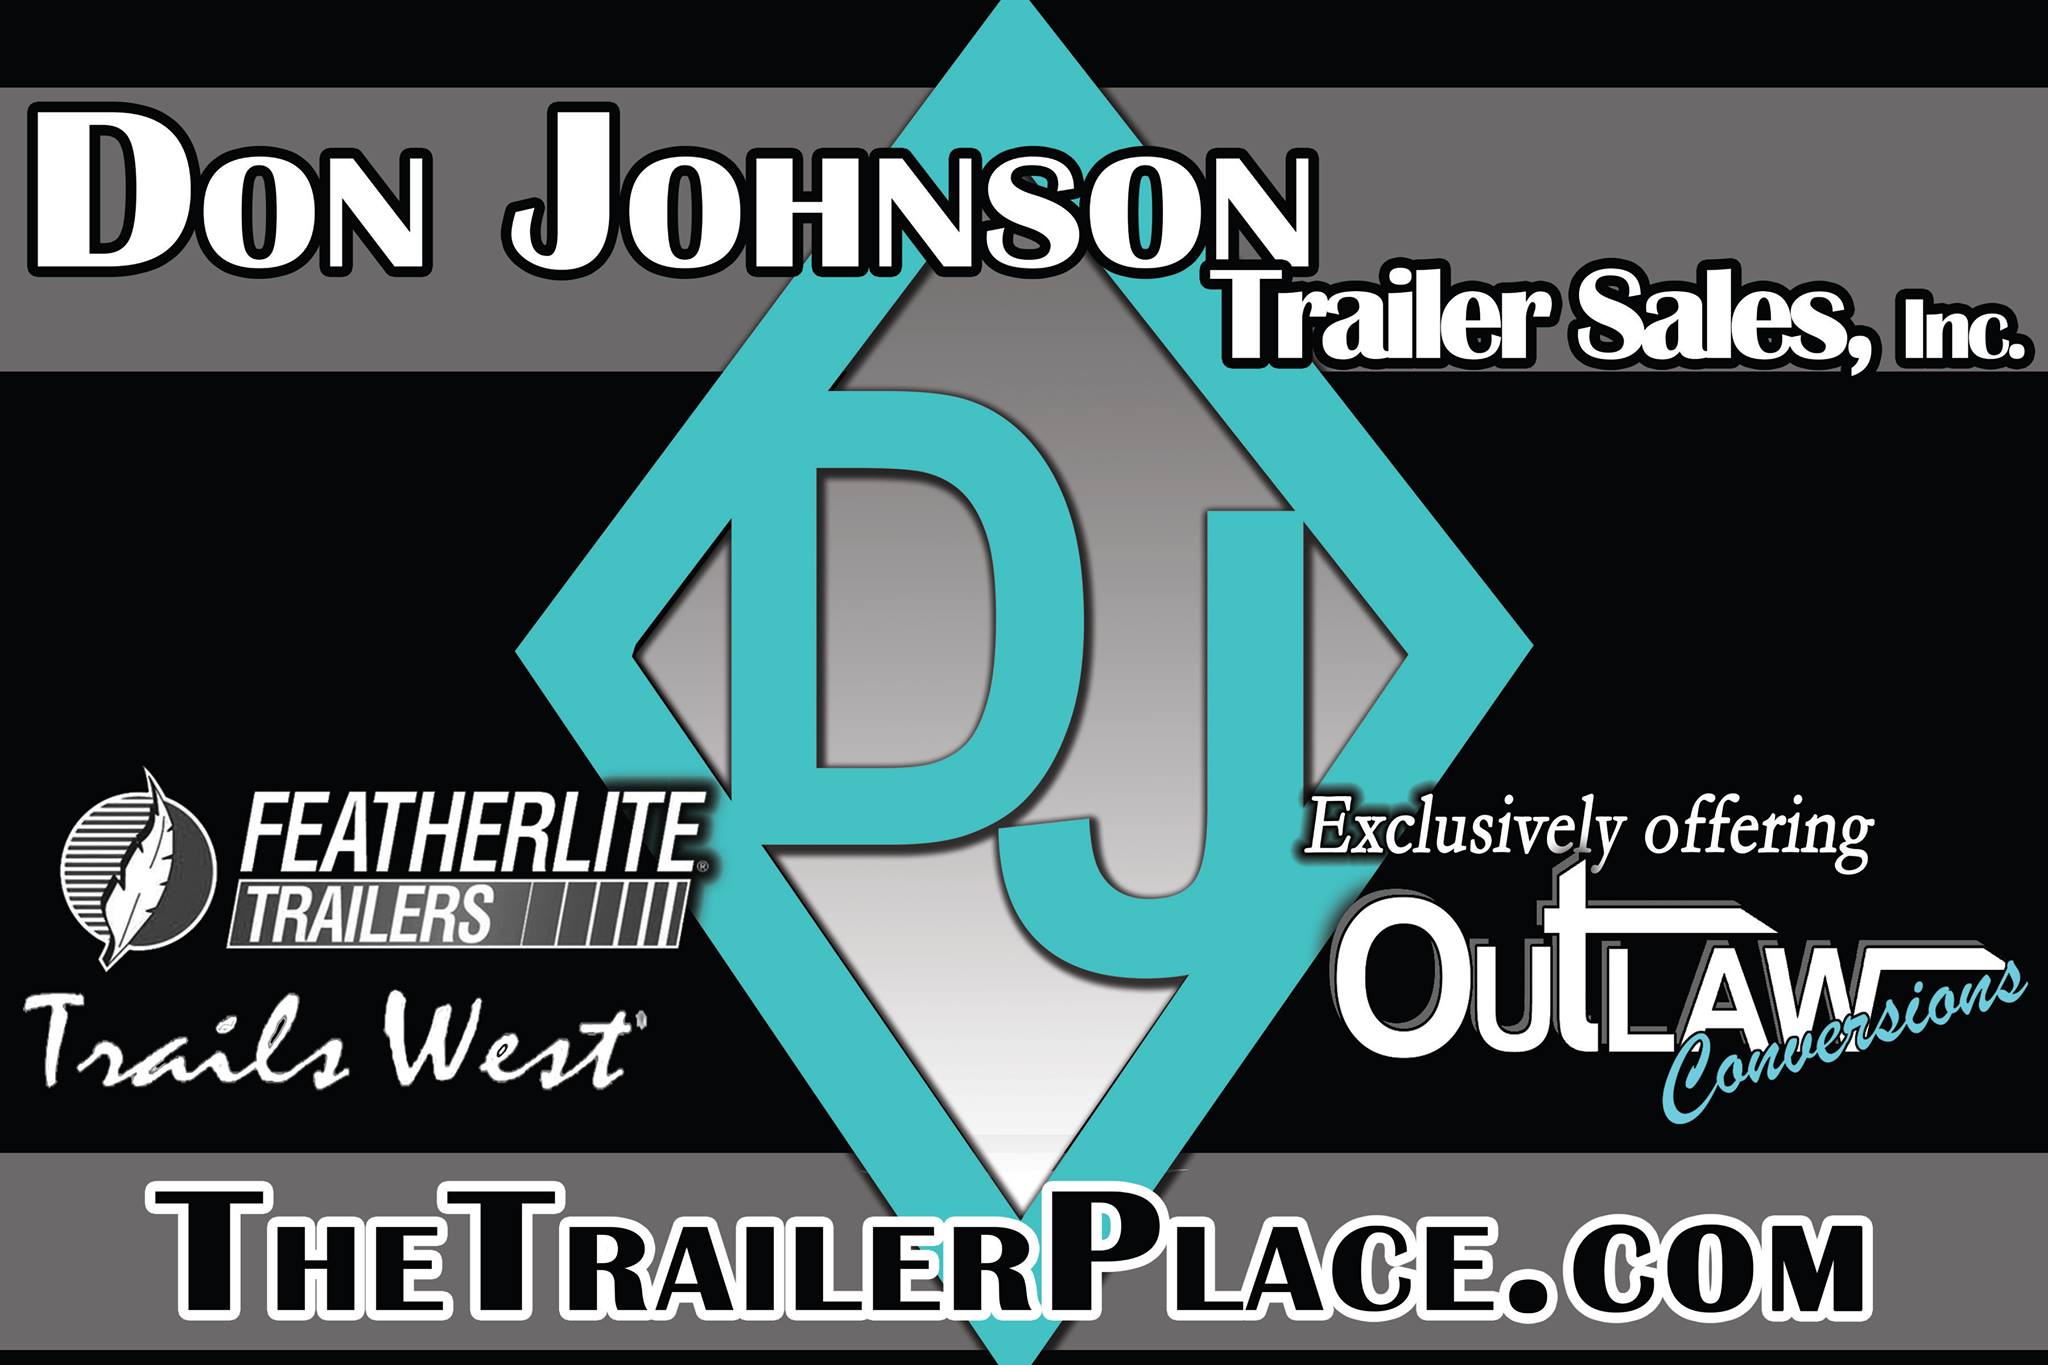 Don Johnson Trailer Sales, Inc.